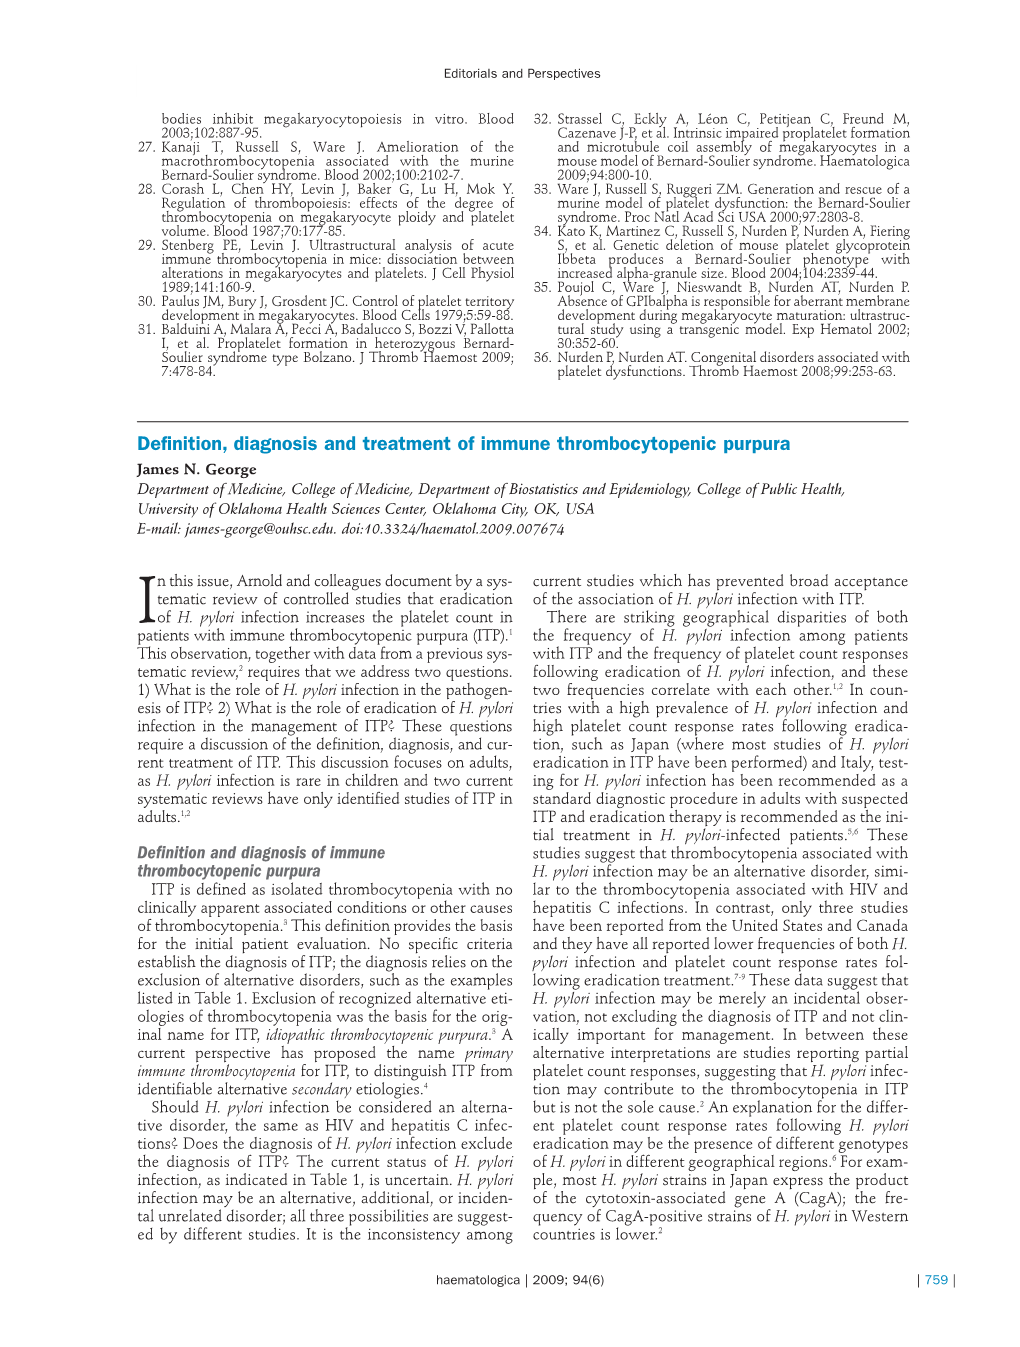 Definition, Diagnosis and Treatment of Immune Thrombocytopenic Purpura James N